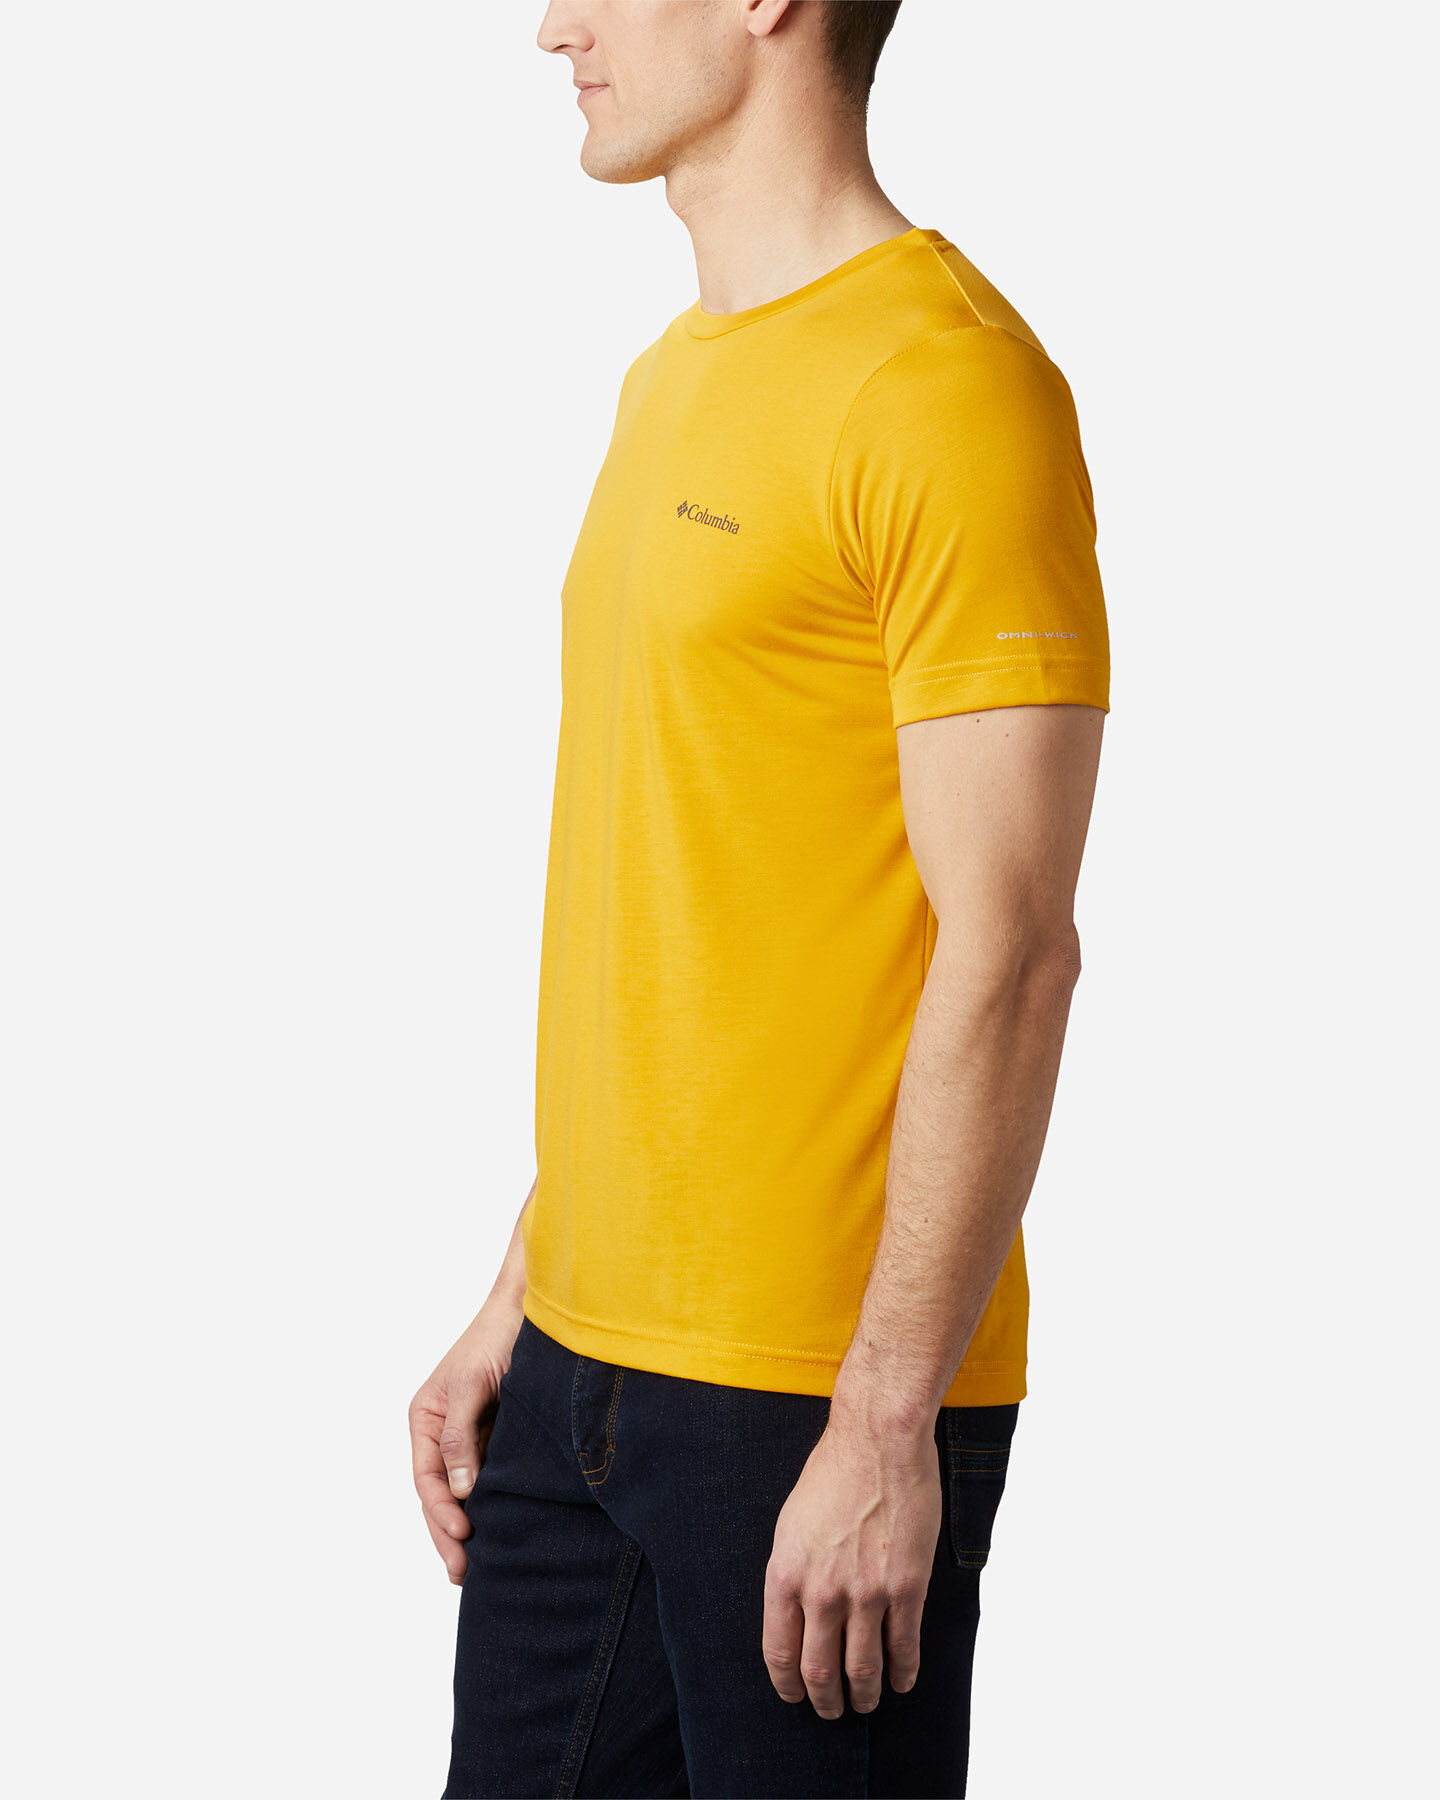  T-Shirt COLUMBIA MAXTRAIL LOGO M S5174871 scatto 2